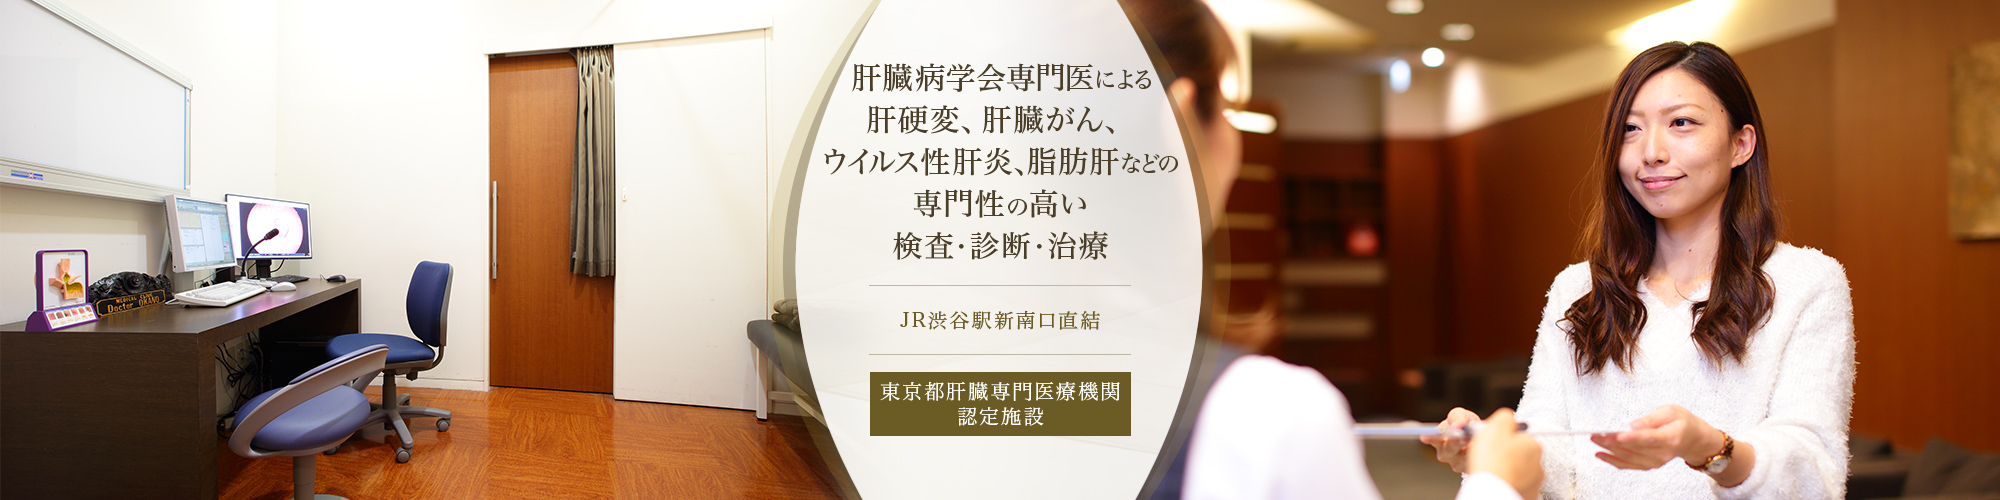 JR渋谷駅新南口直結 肝臓病学会専門医による肝硬変、肝臓がん、ウイルス性肝炎、脂肪肝などの専門性の高い検査・診断・治療